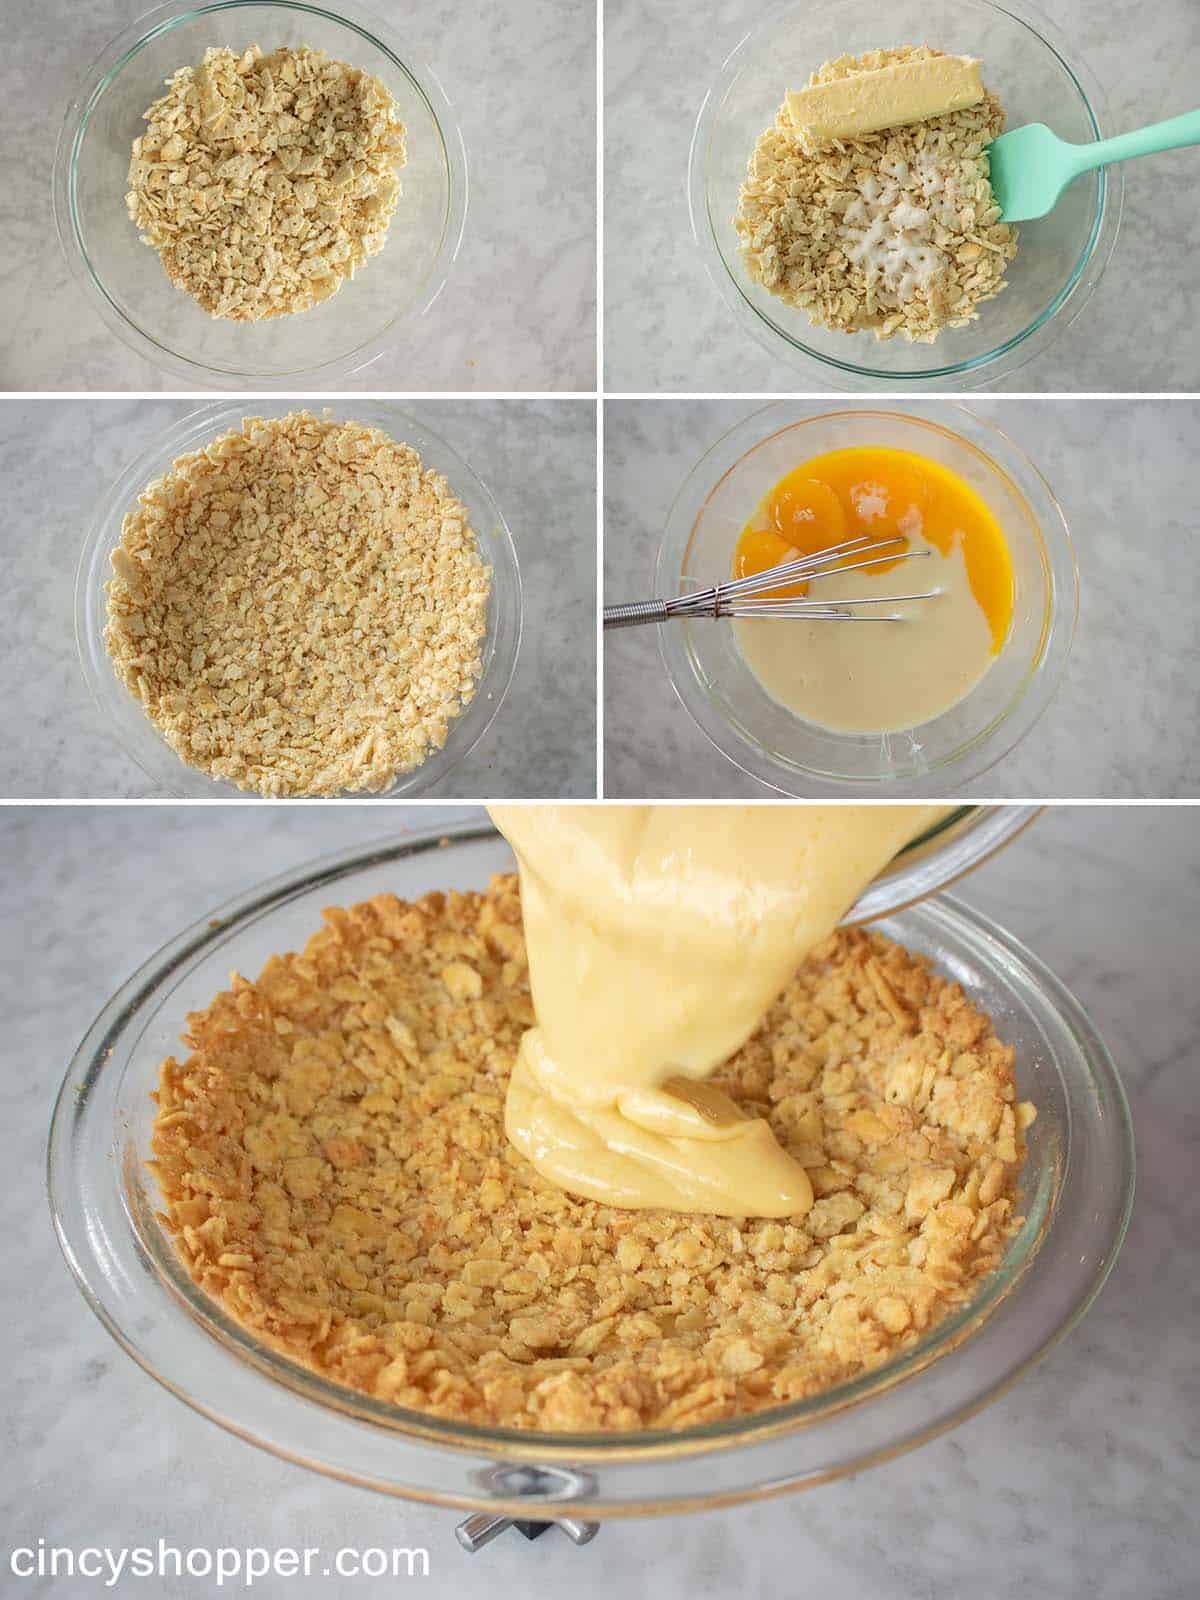 Process how to make Atlantic Beach Pie Recipe